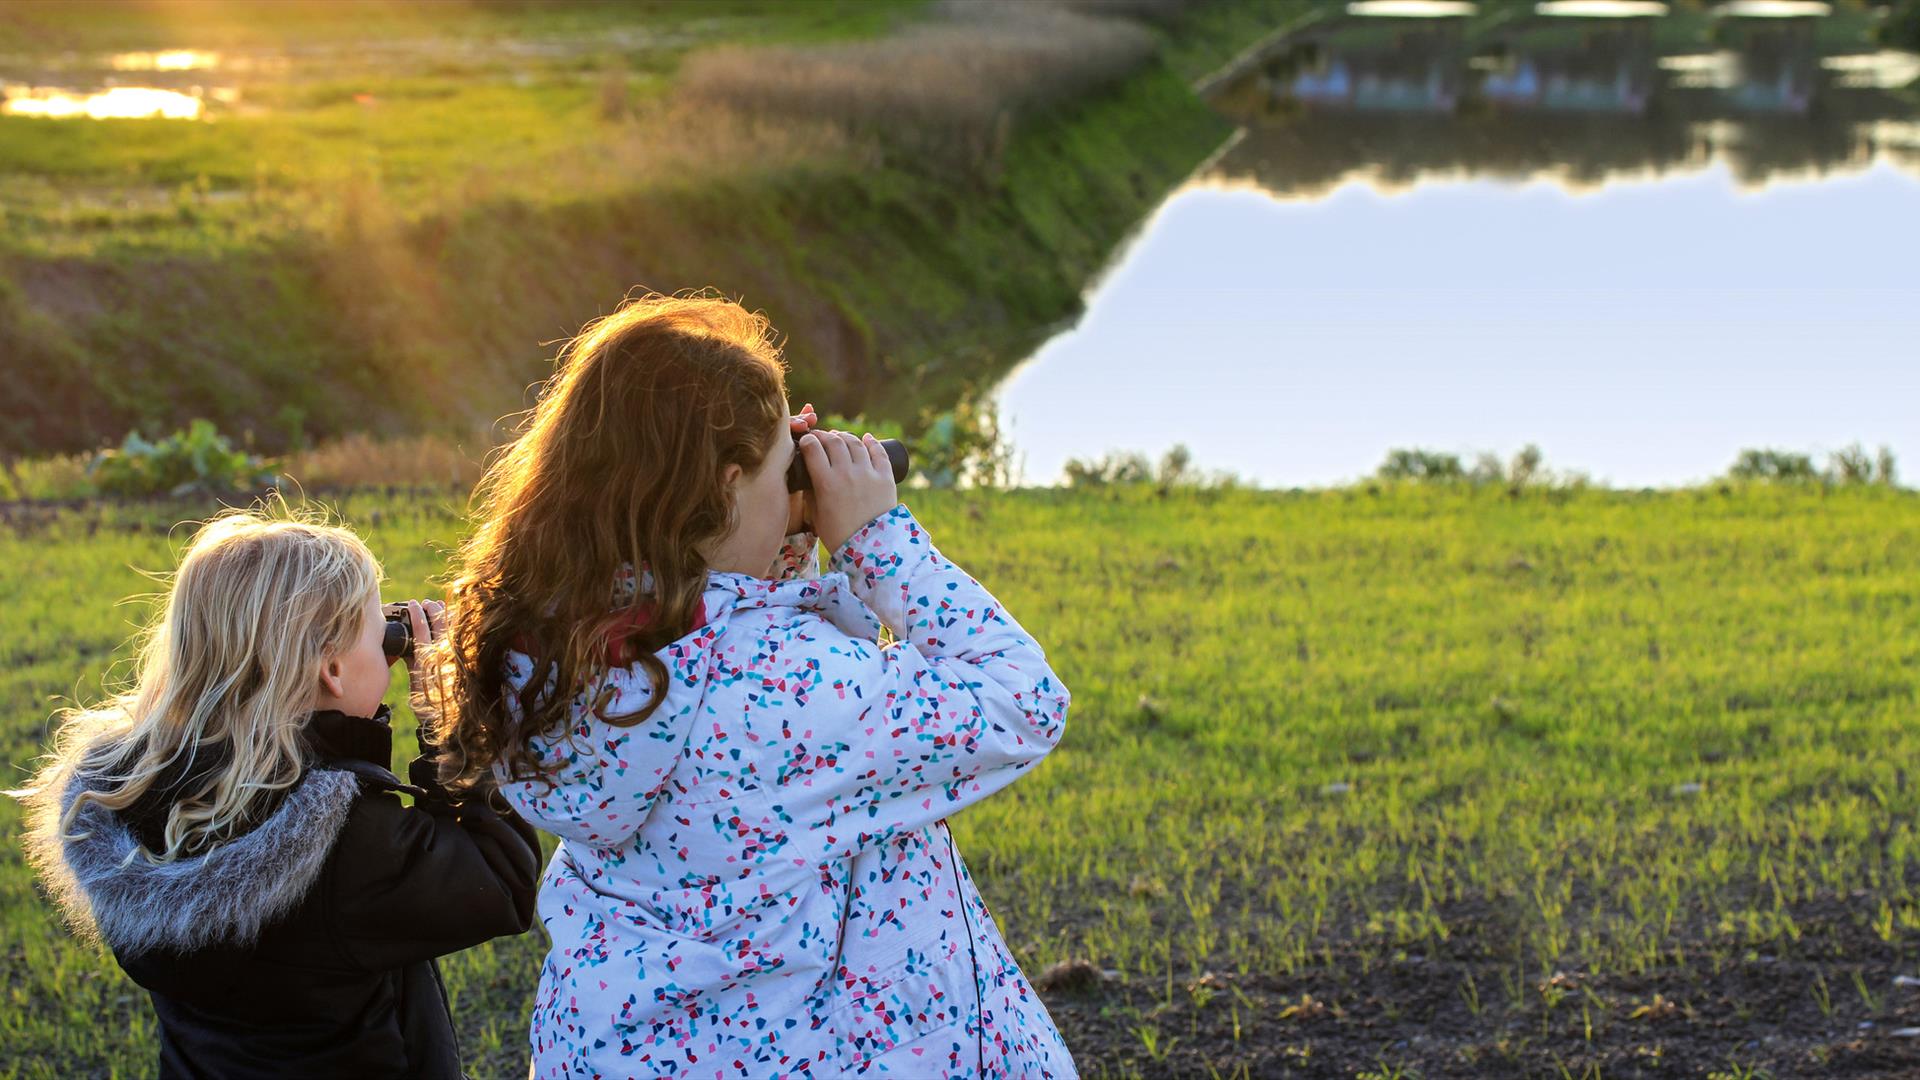 two young girls looking through binoculars over the wetlands